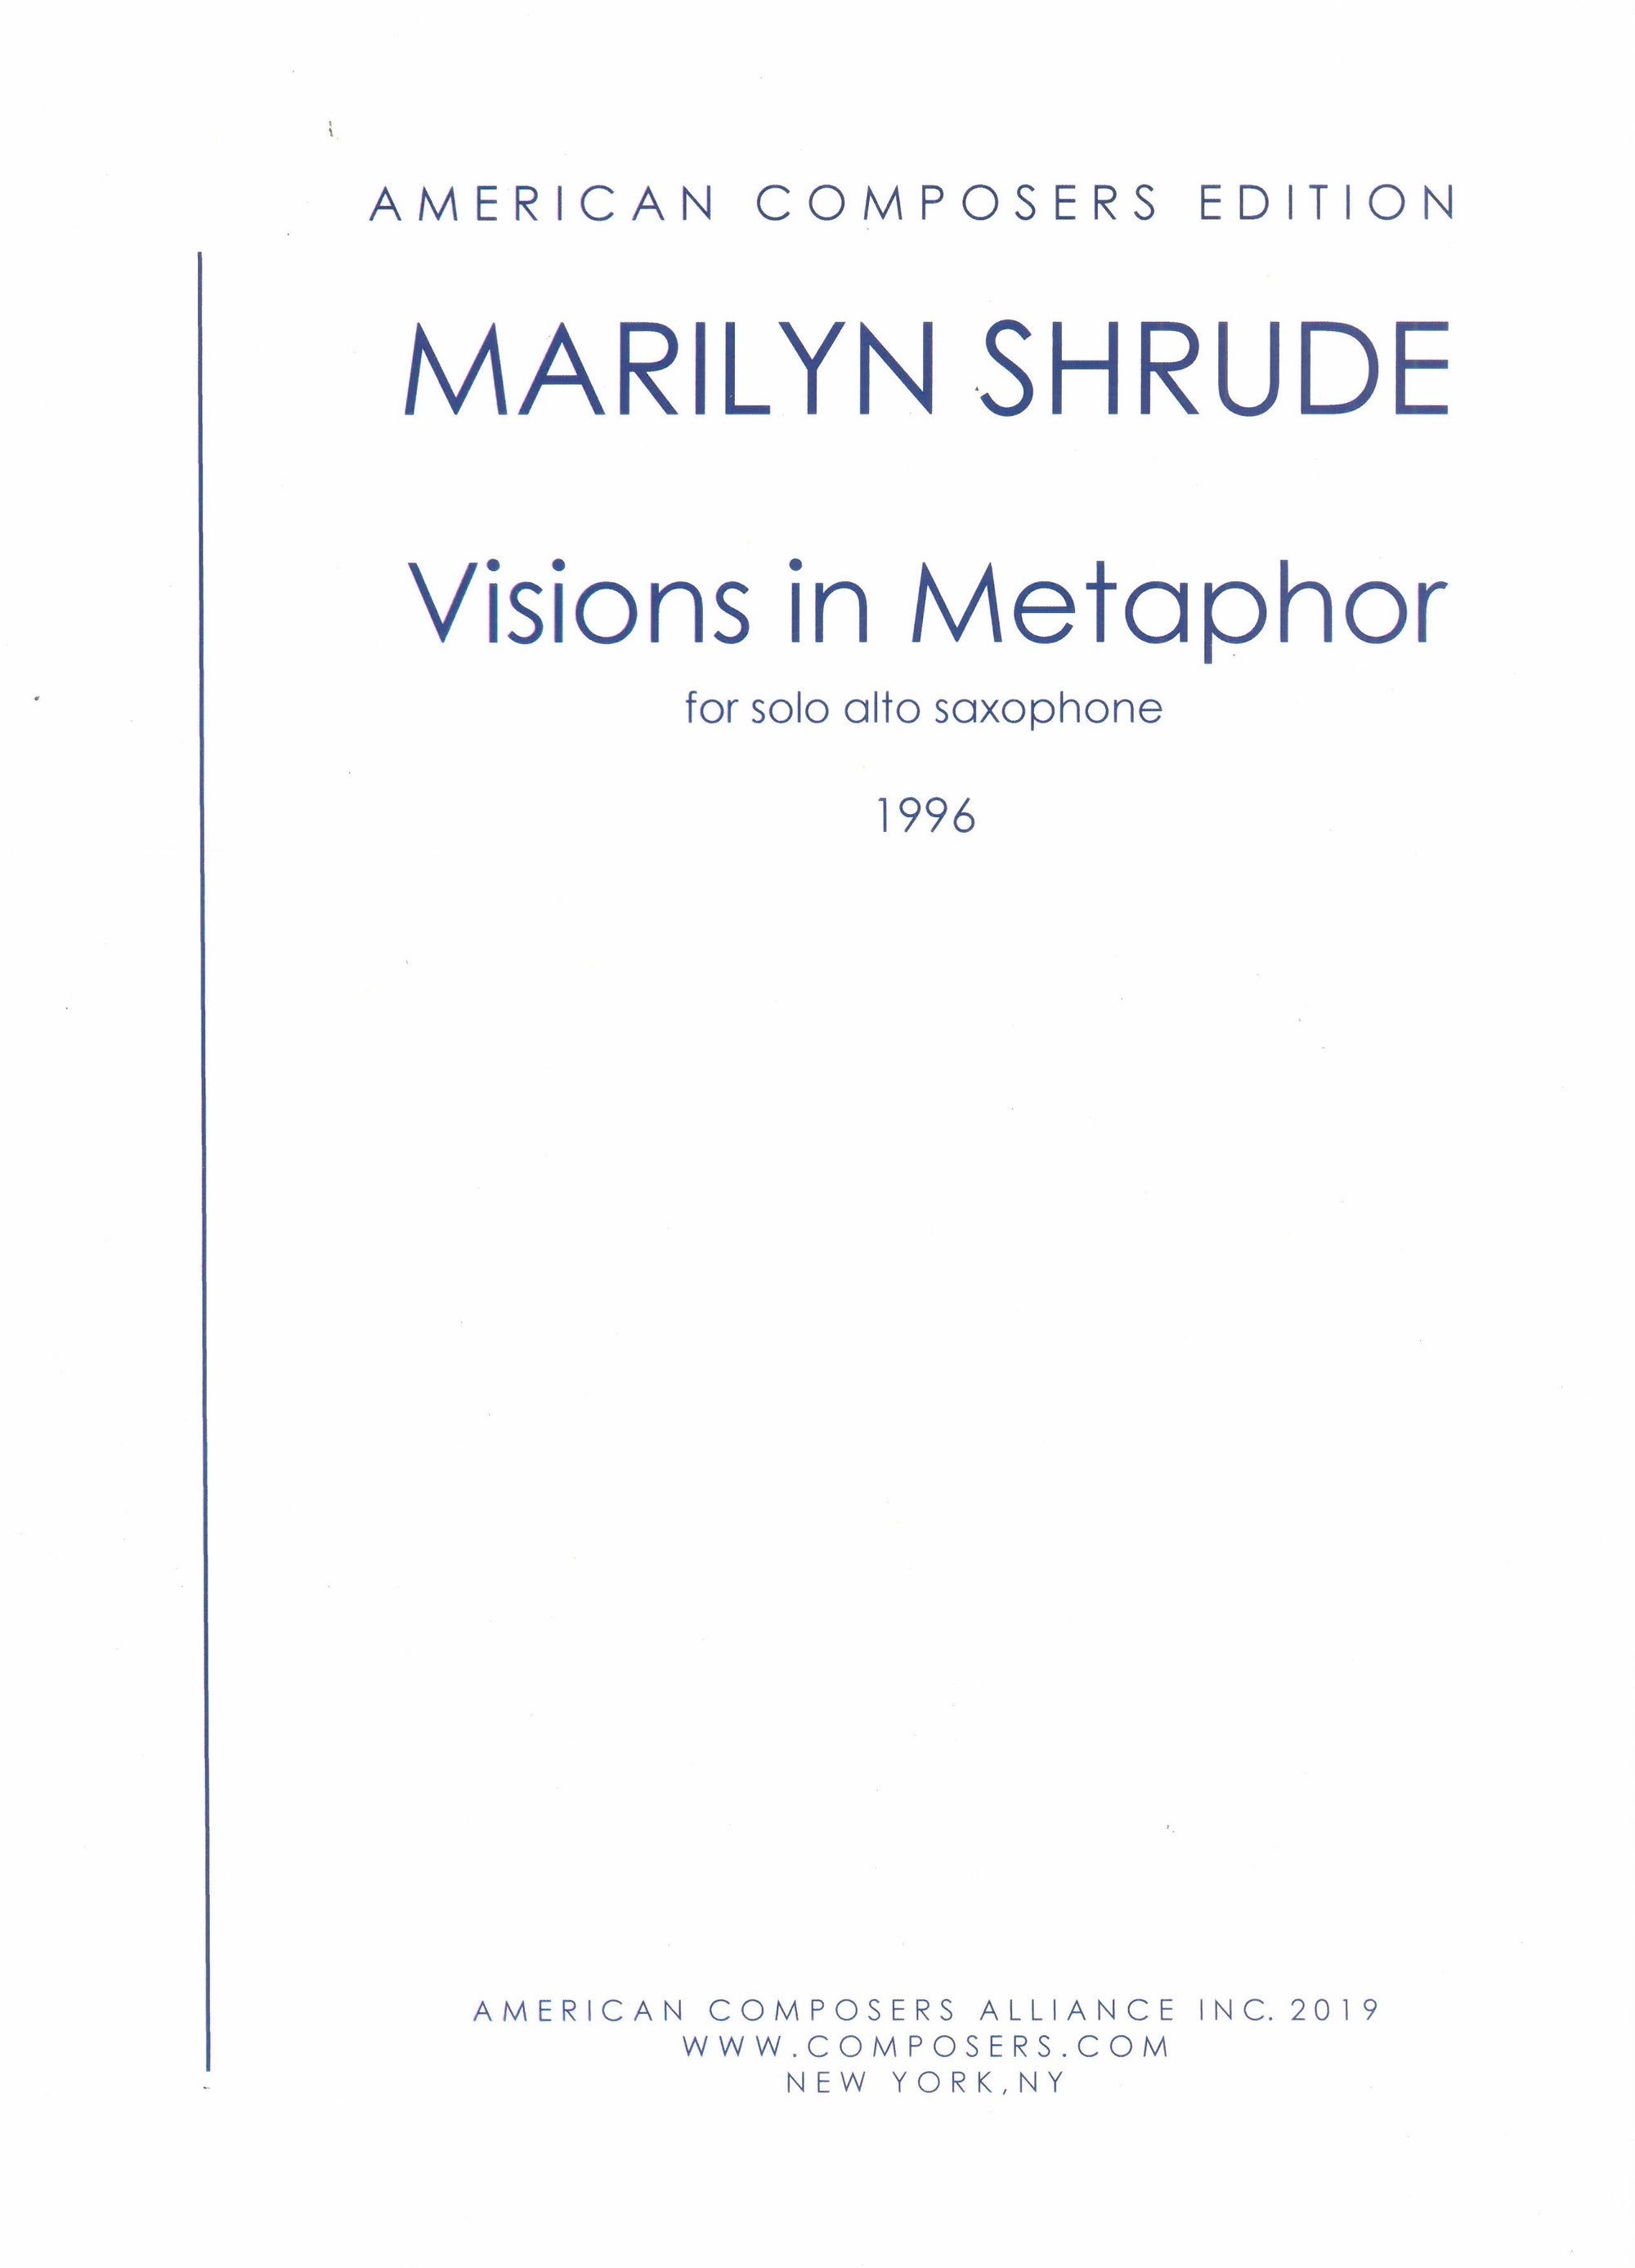 Shrude: Visions in Metaphor